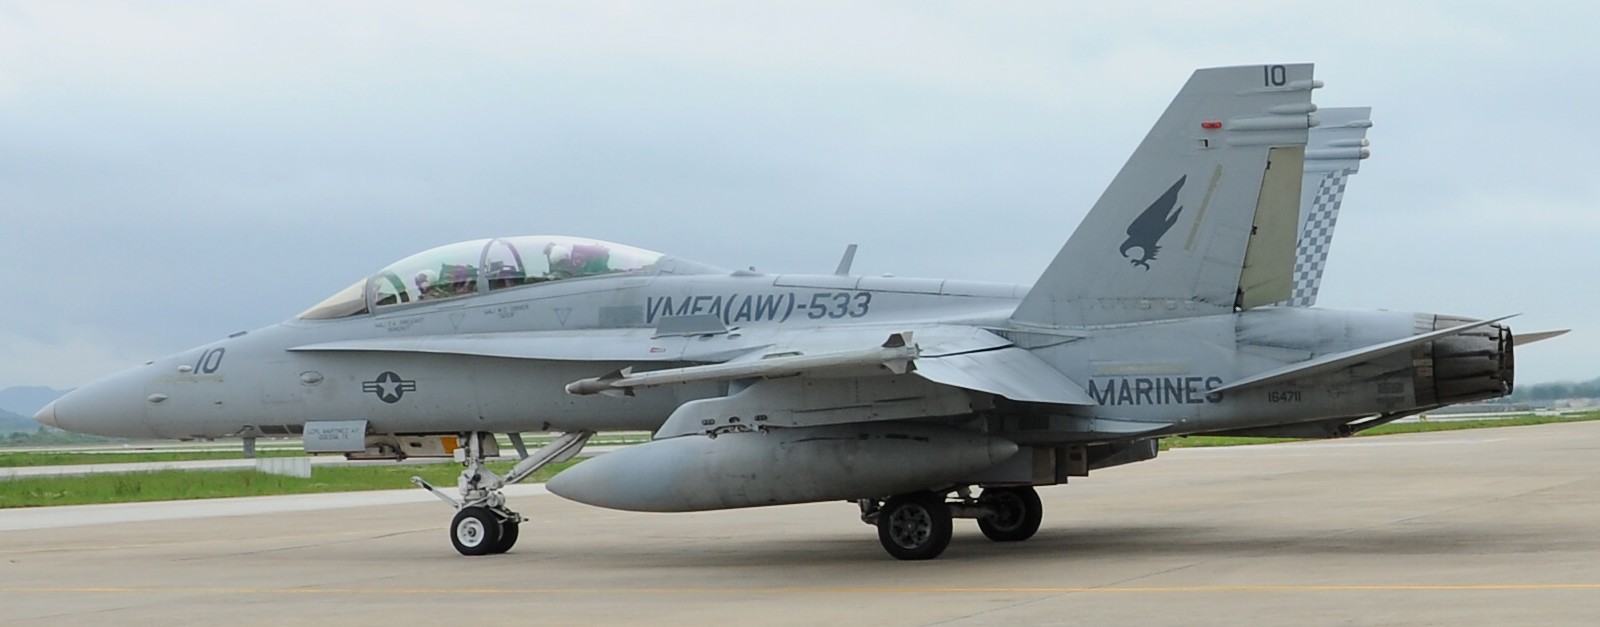 vmfa(aw)-533 hawks marine fighter attack squadron usmc f/a-18d hornet 51 gwangju air base korea